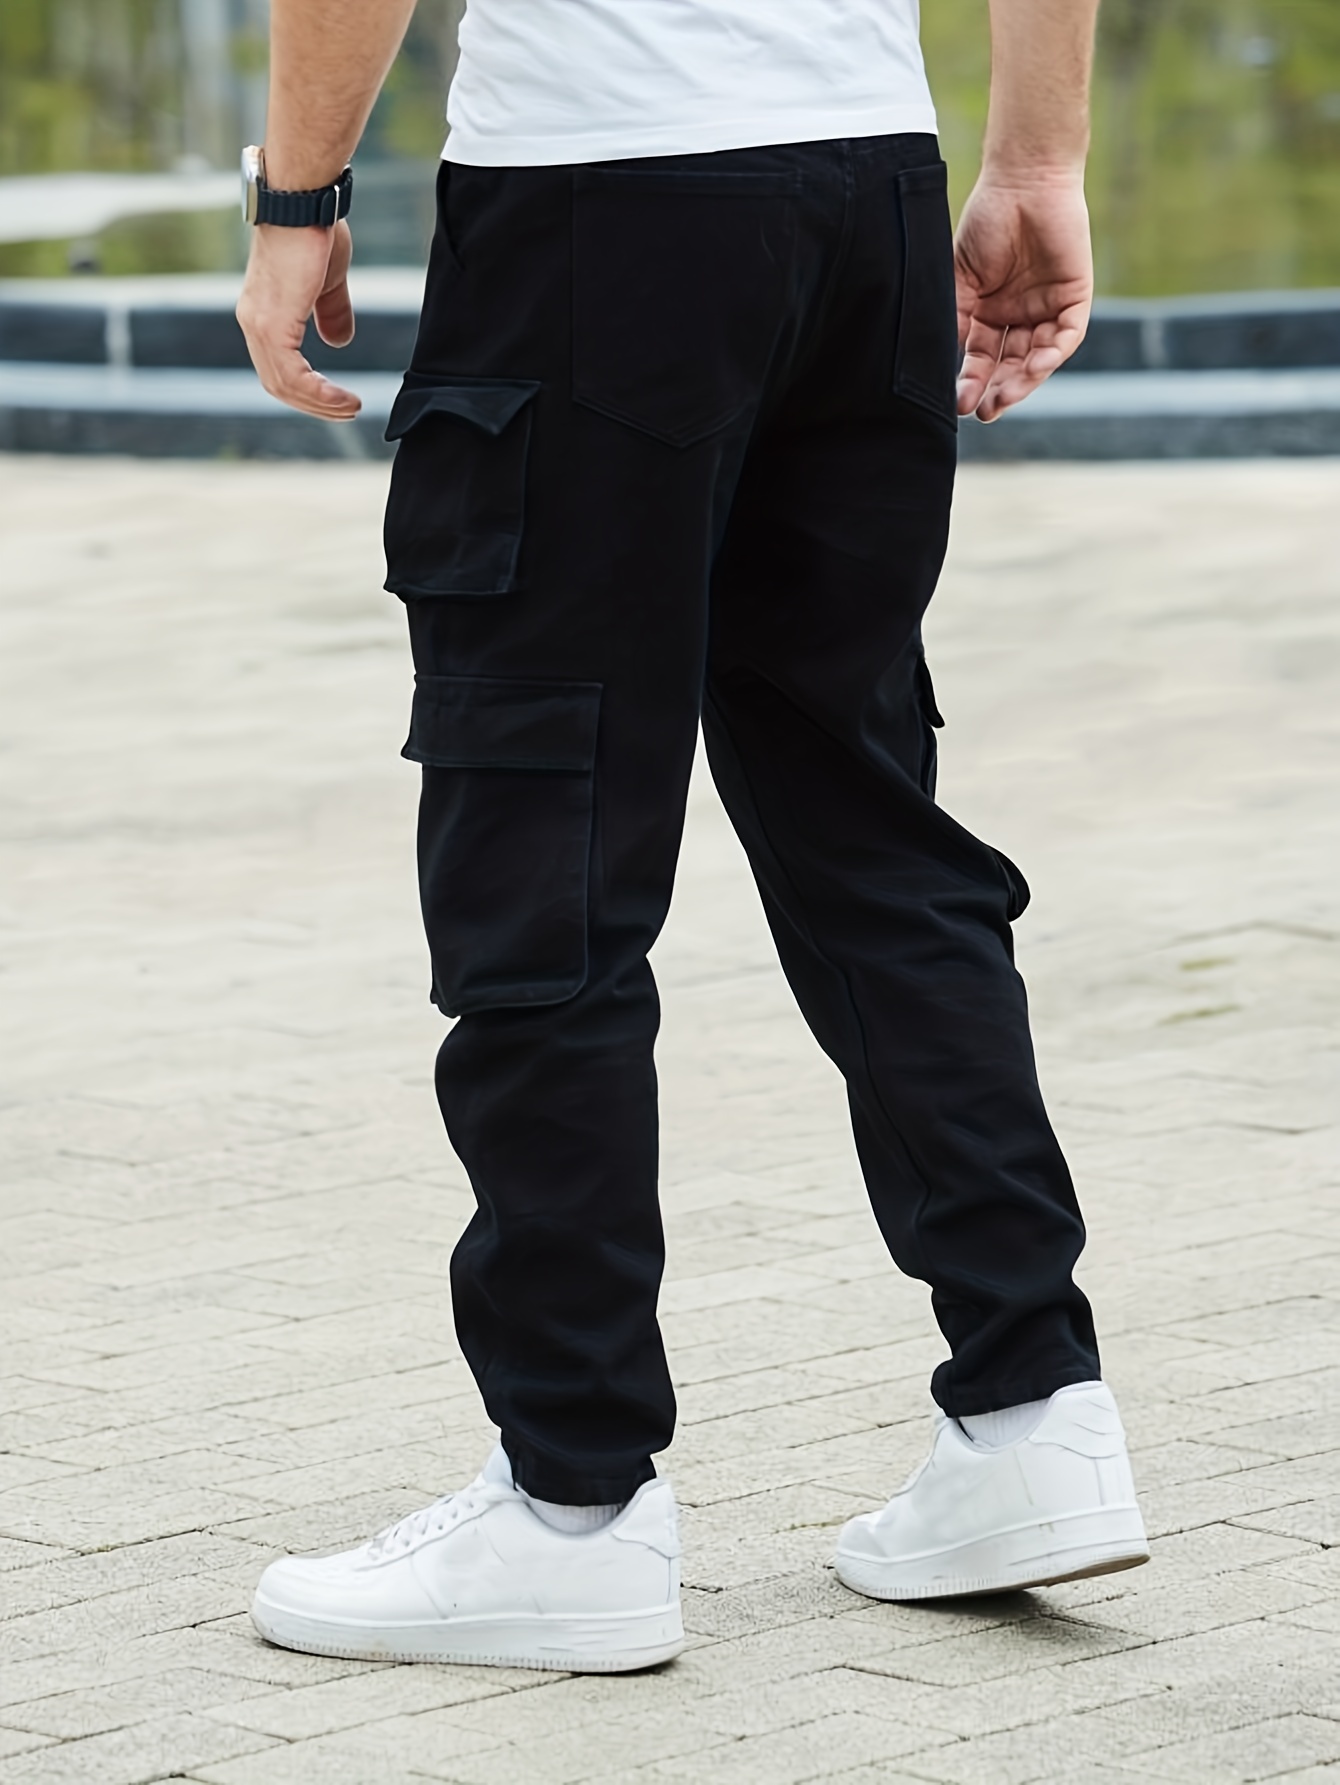 Loose Fit Multi Pocket Jeans, Men's Casual Street Style Denim Cargo Pants